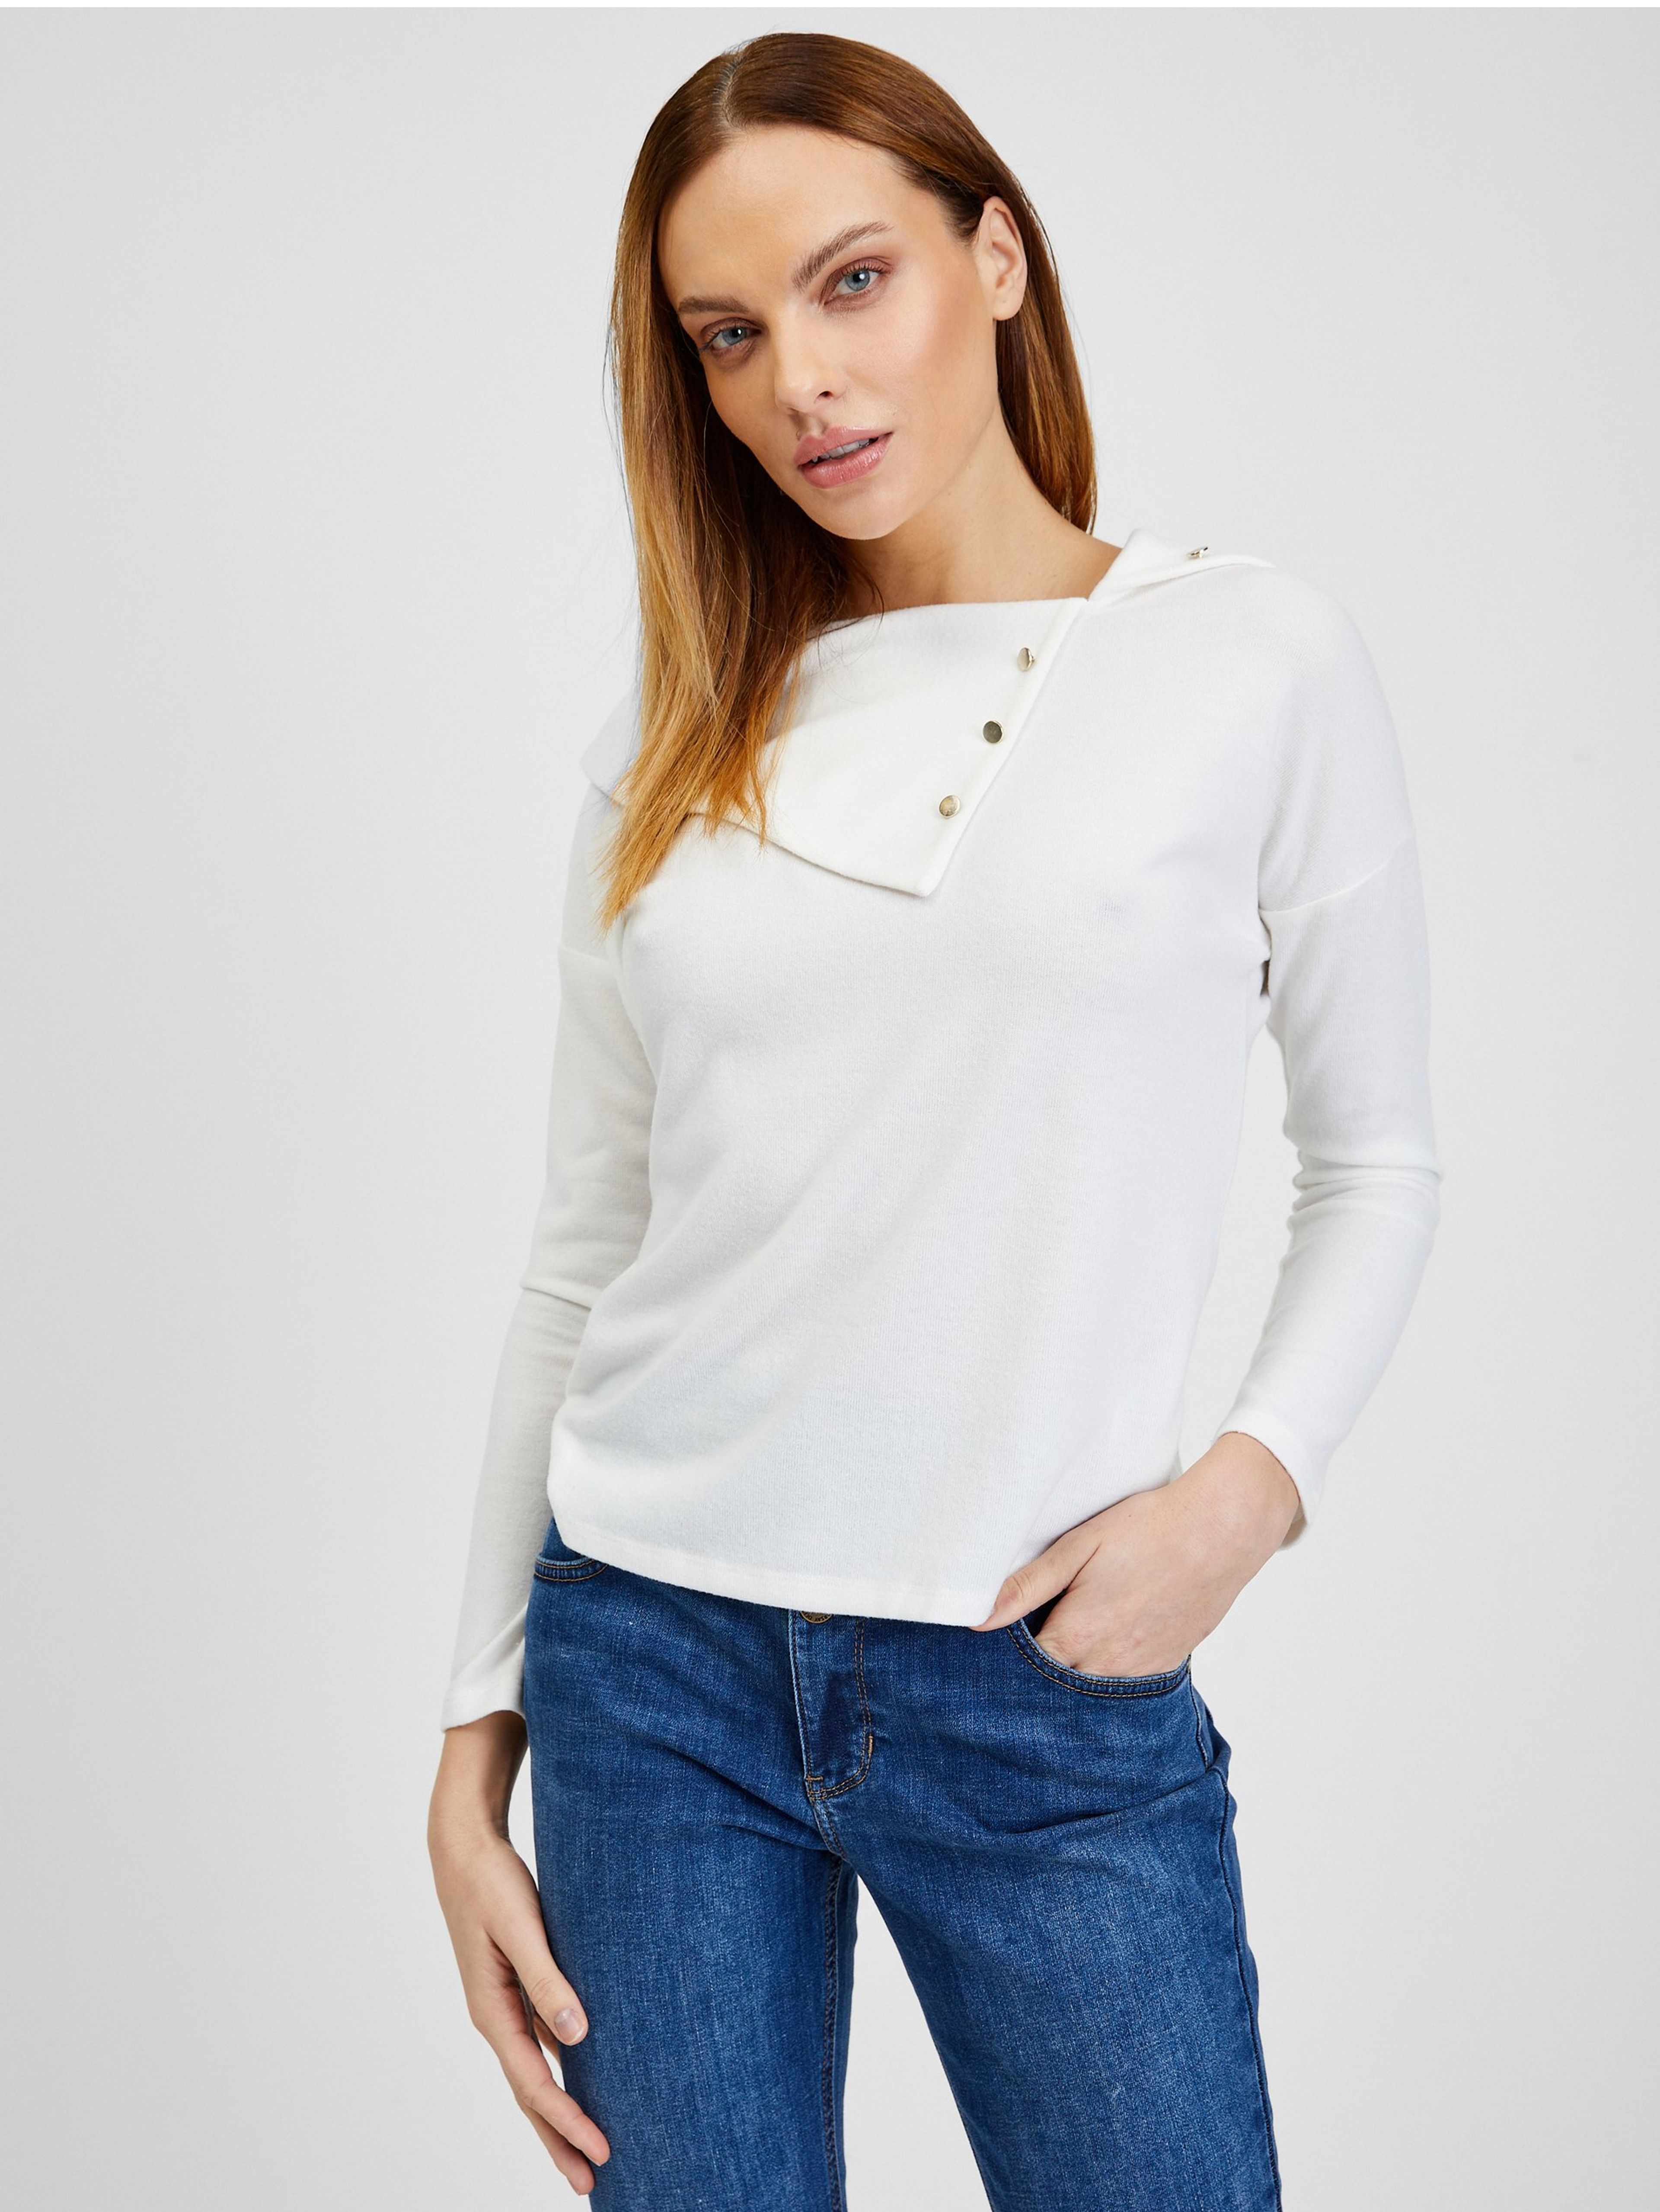 Biele dámske tričko s ozdobnými detailmi ORSAY